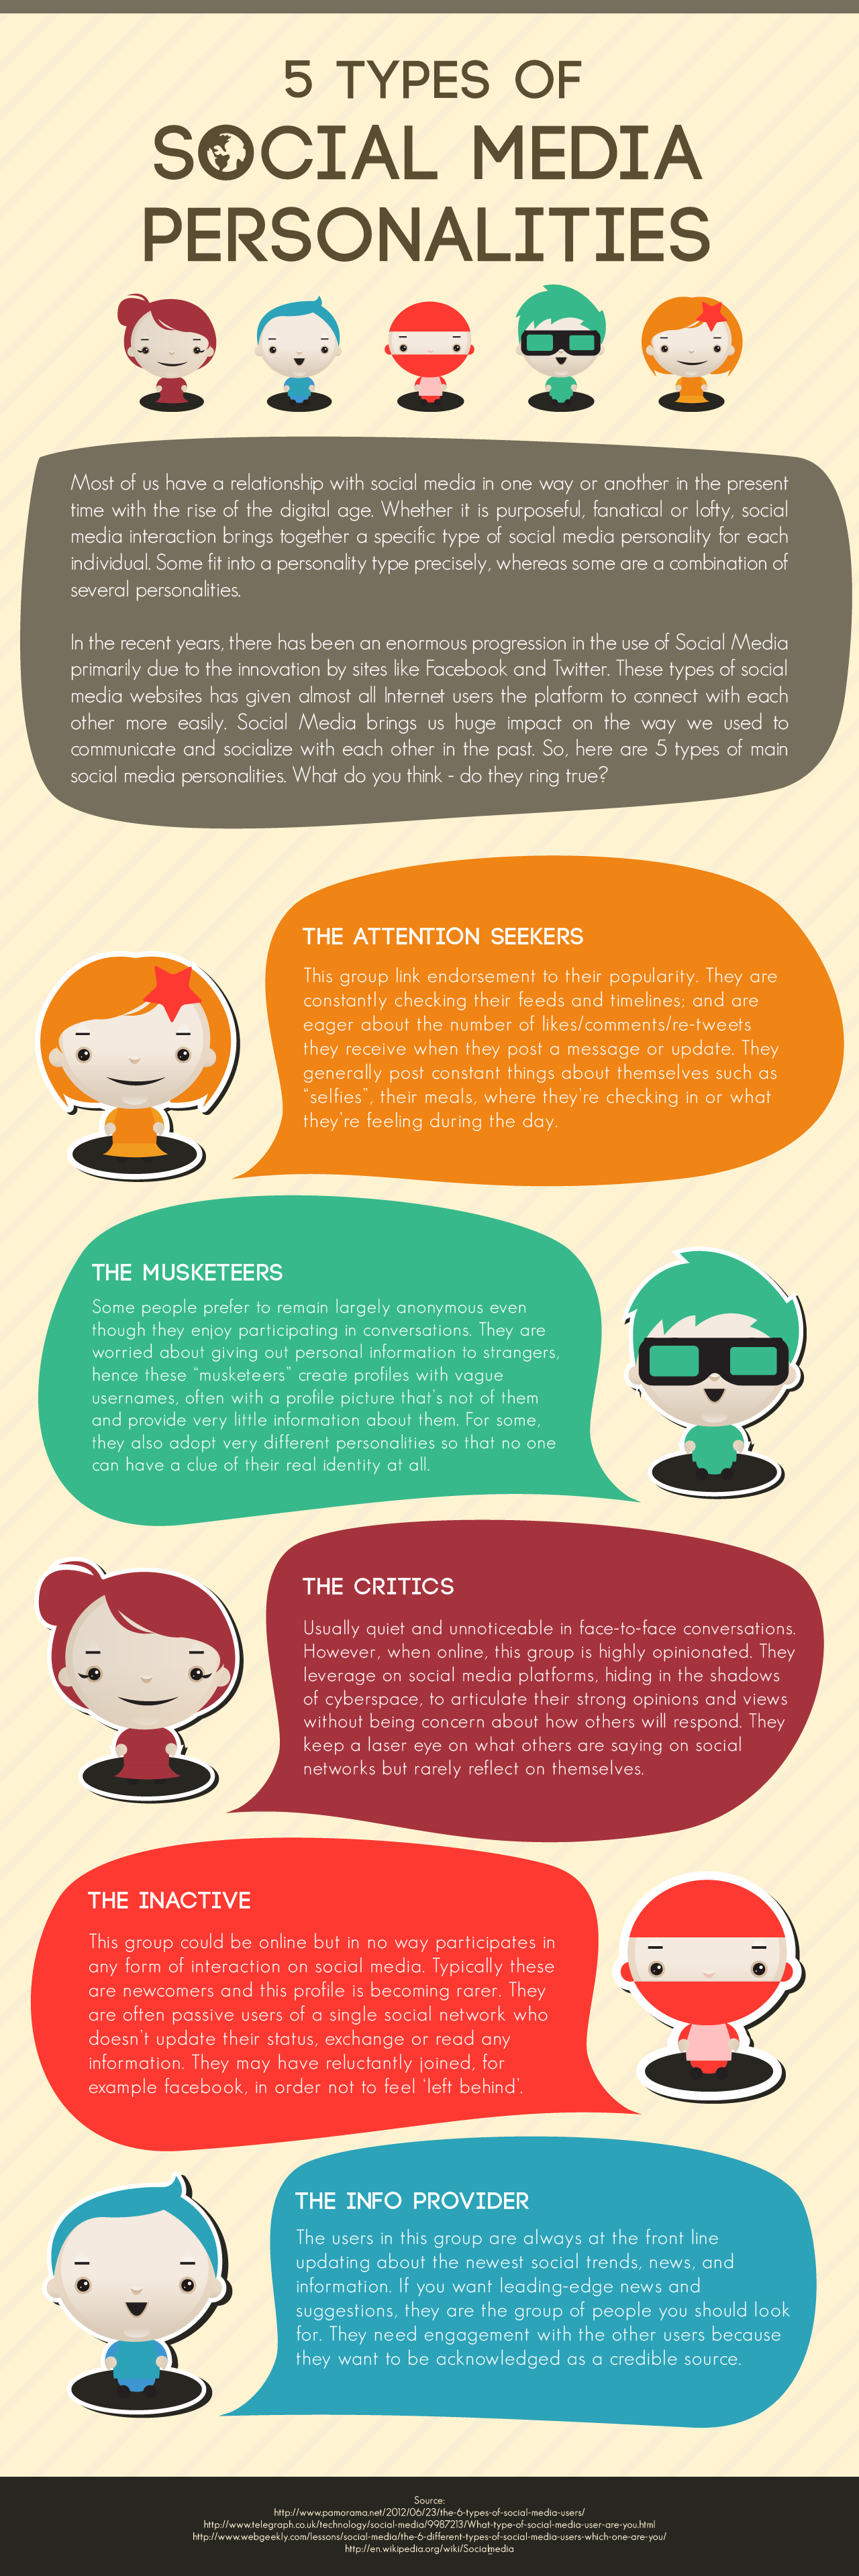 5 Types of Social Media Personalities